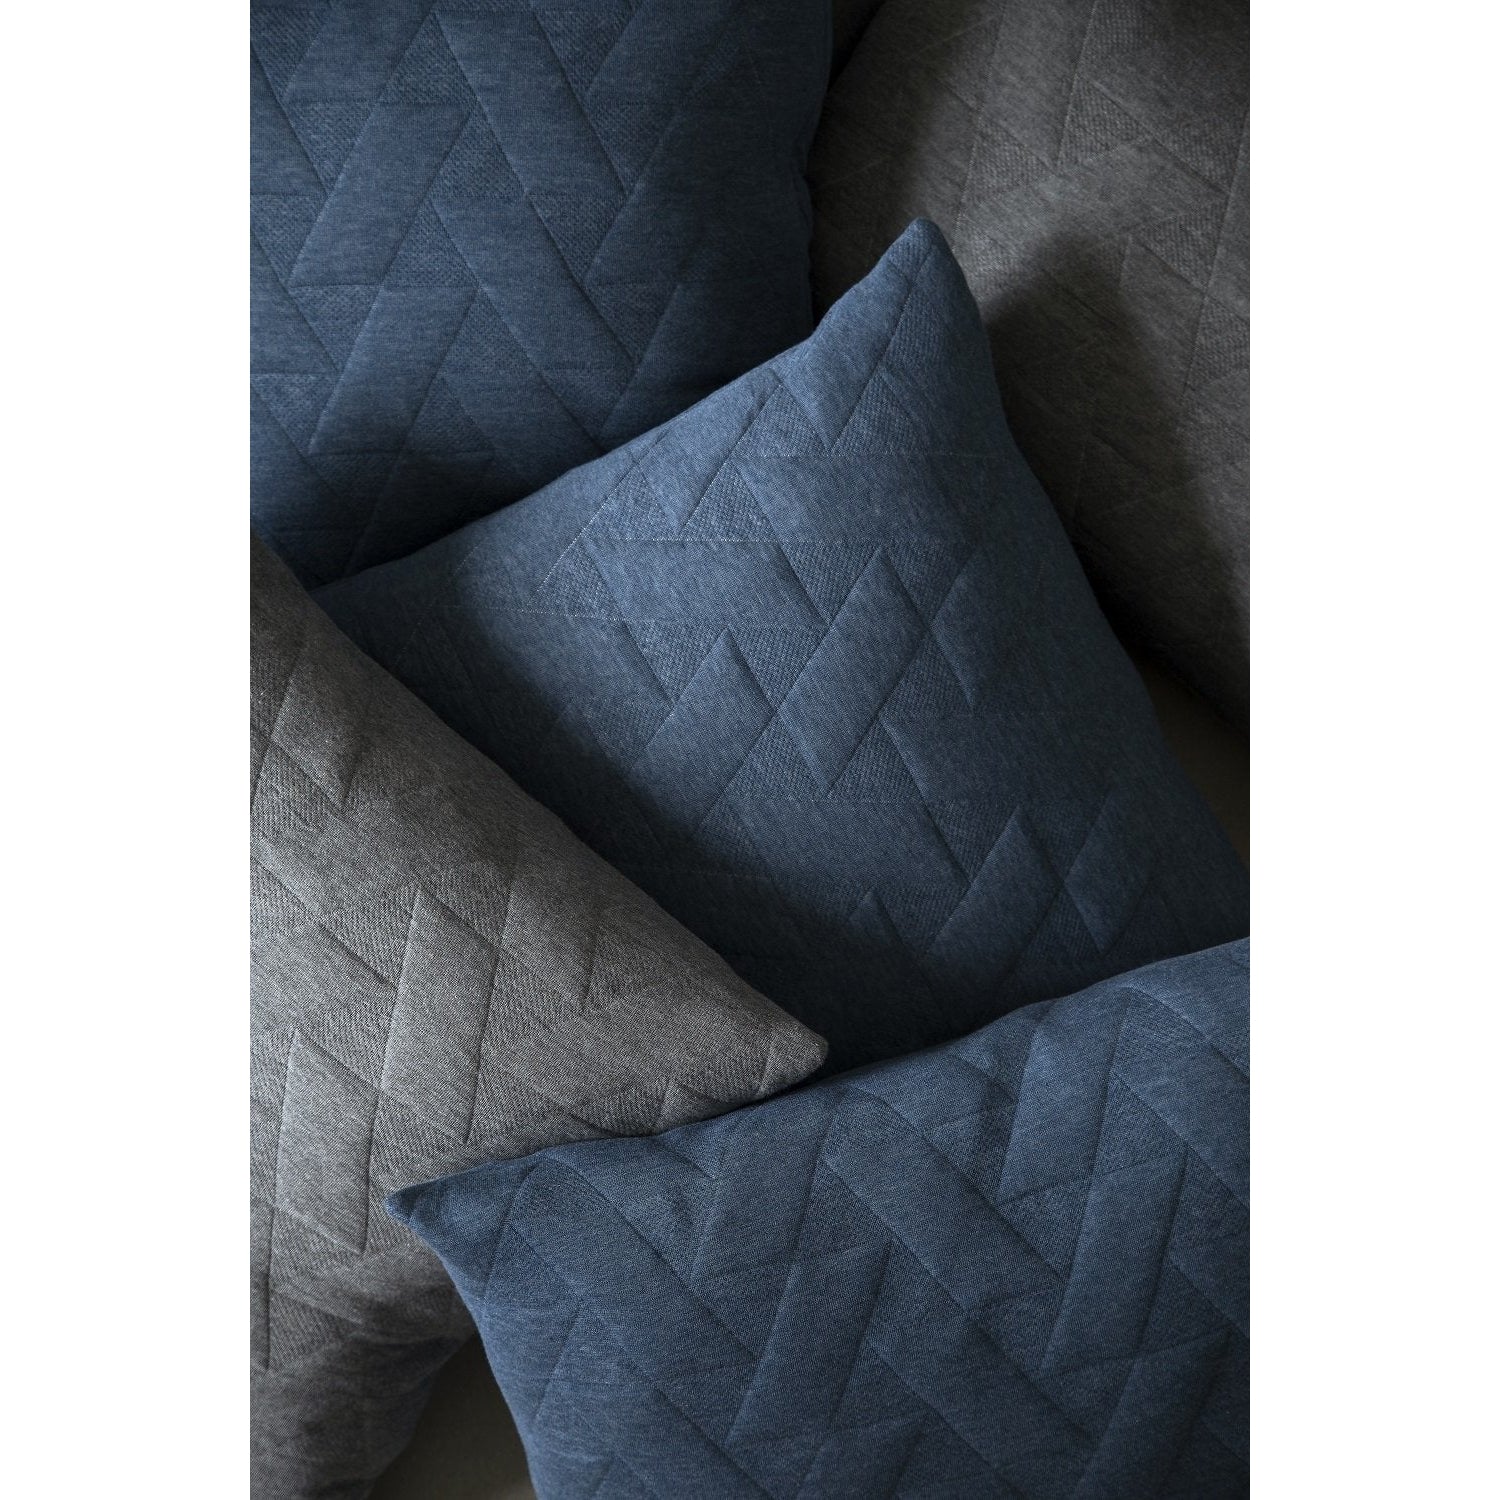 ArchitectMade Finn Juhl Moture Cushion, grigio 40x60